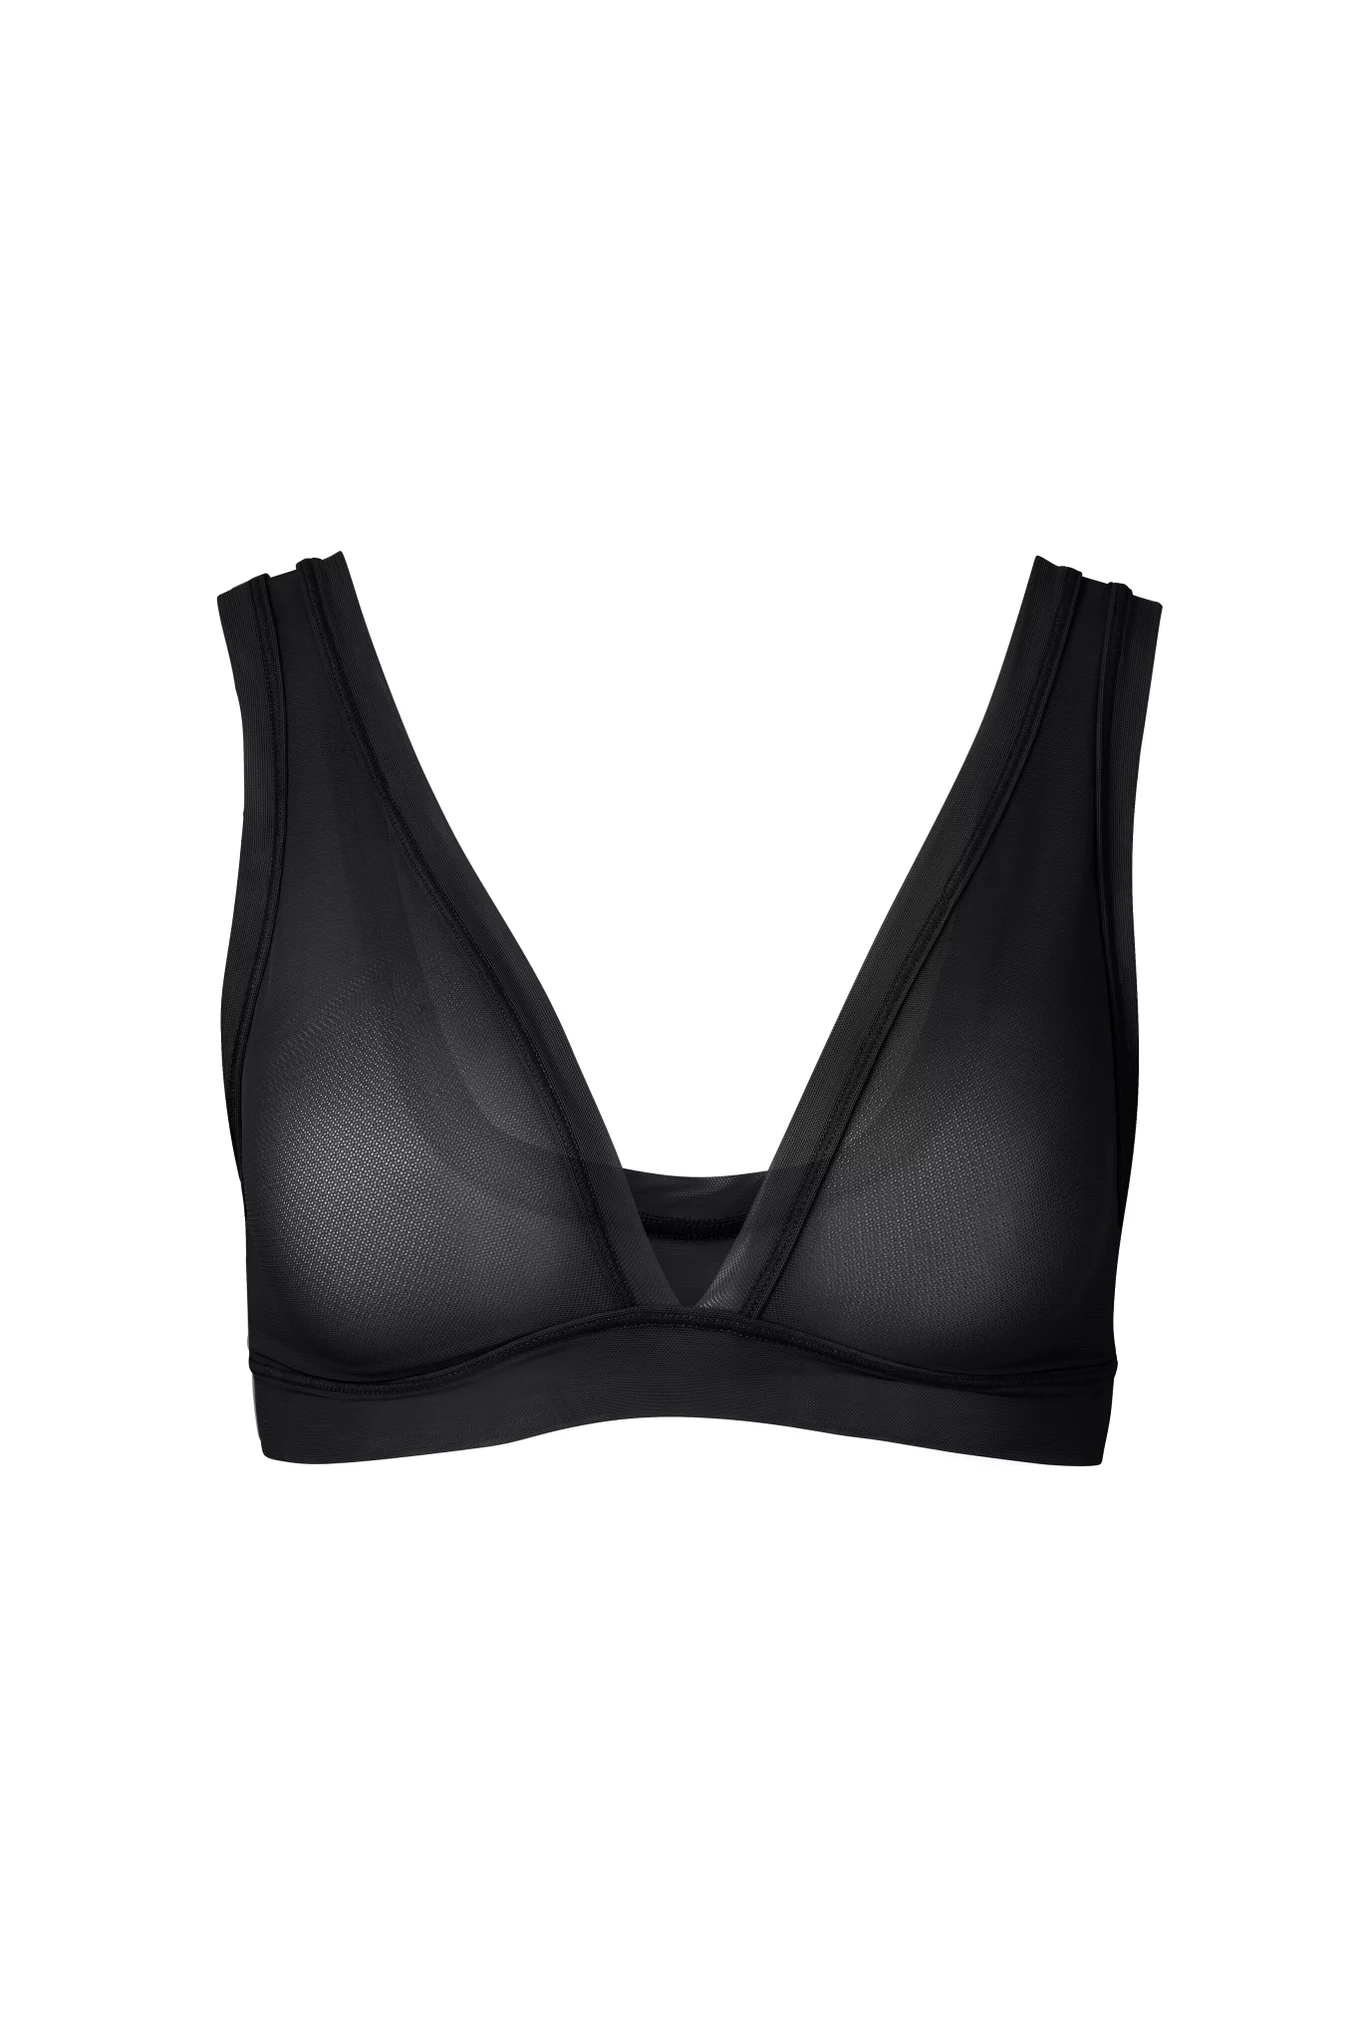 Calvin Klein Triangle Bralette Black Size M - $13 (67% Off Retail